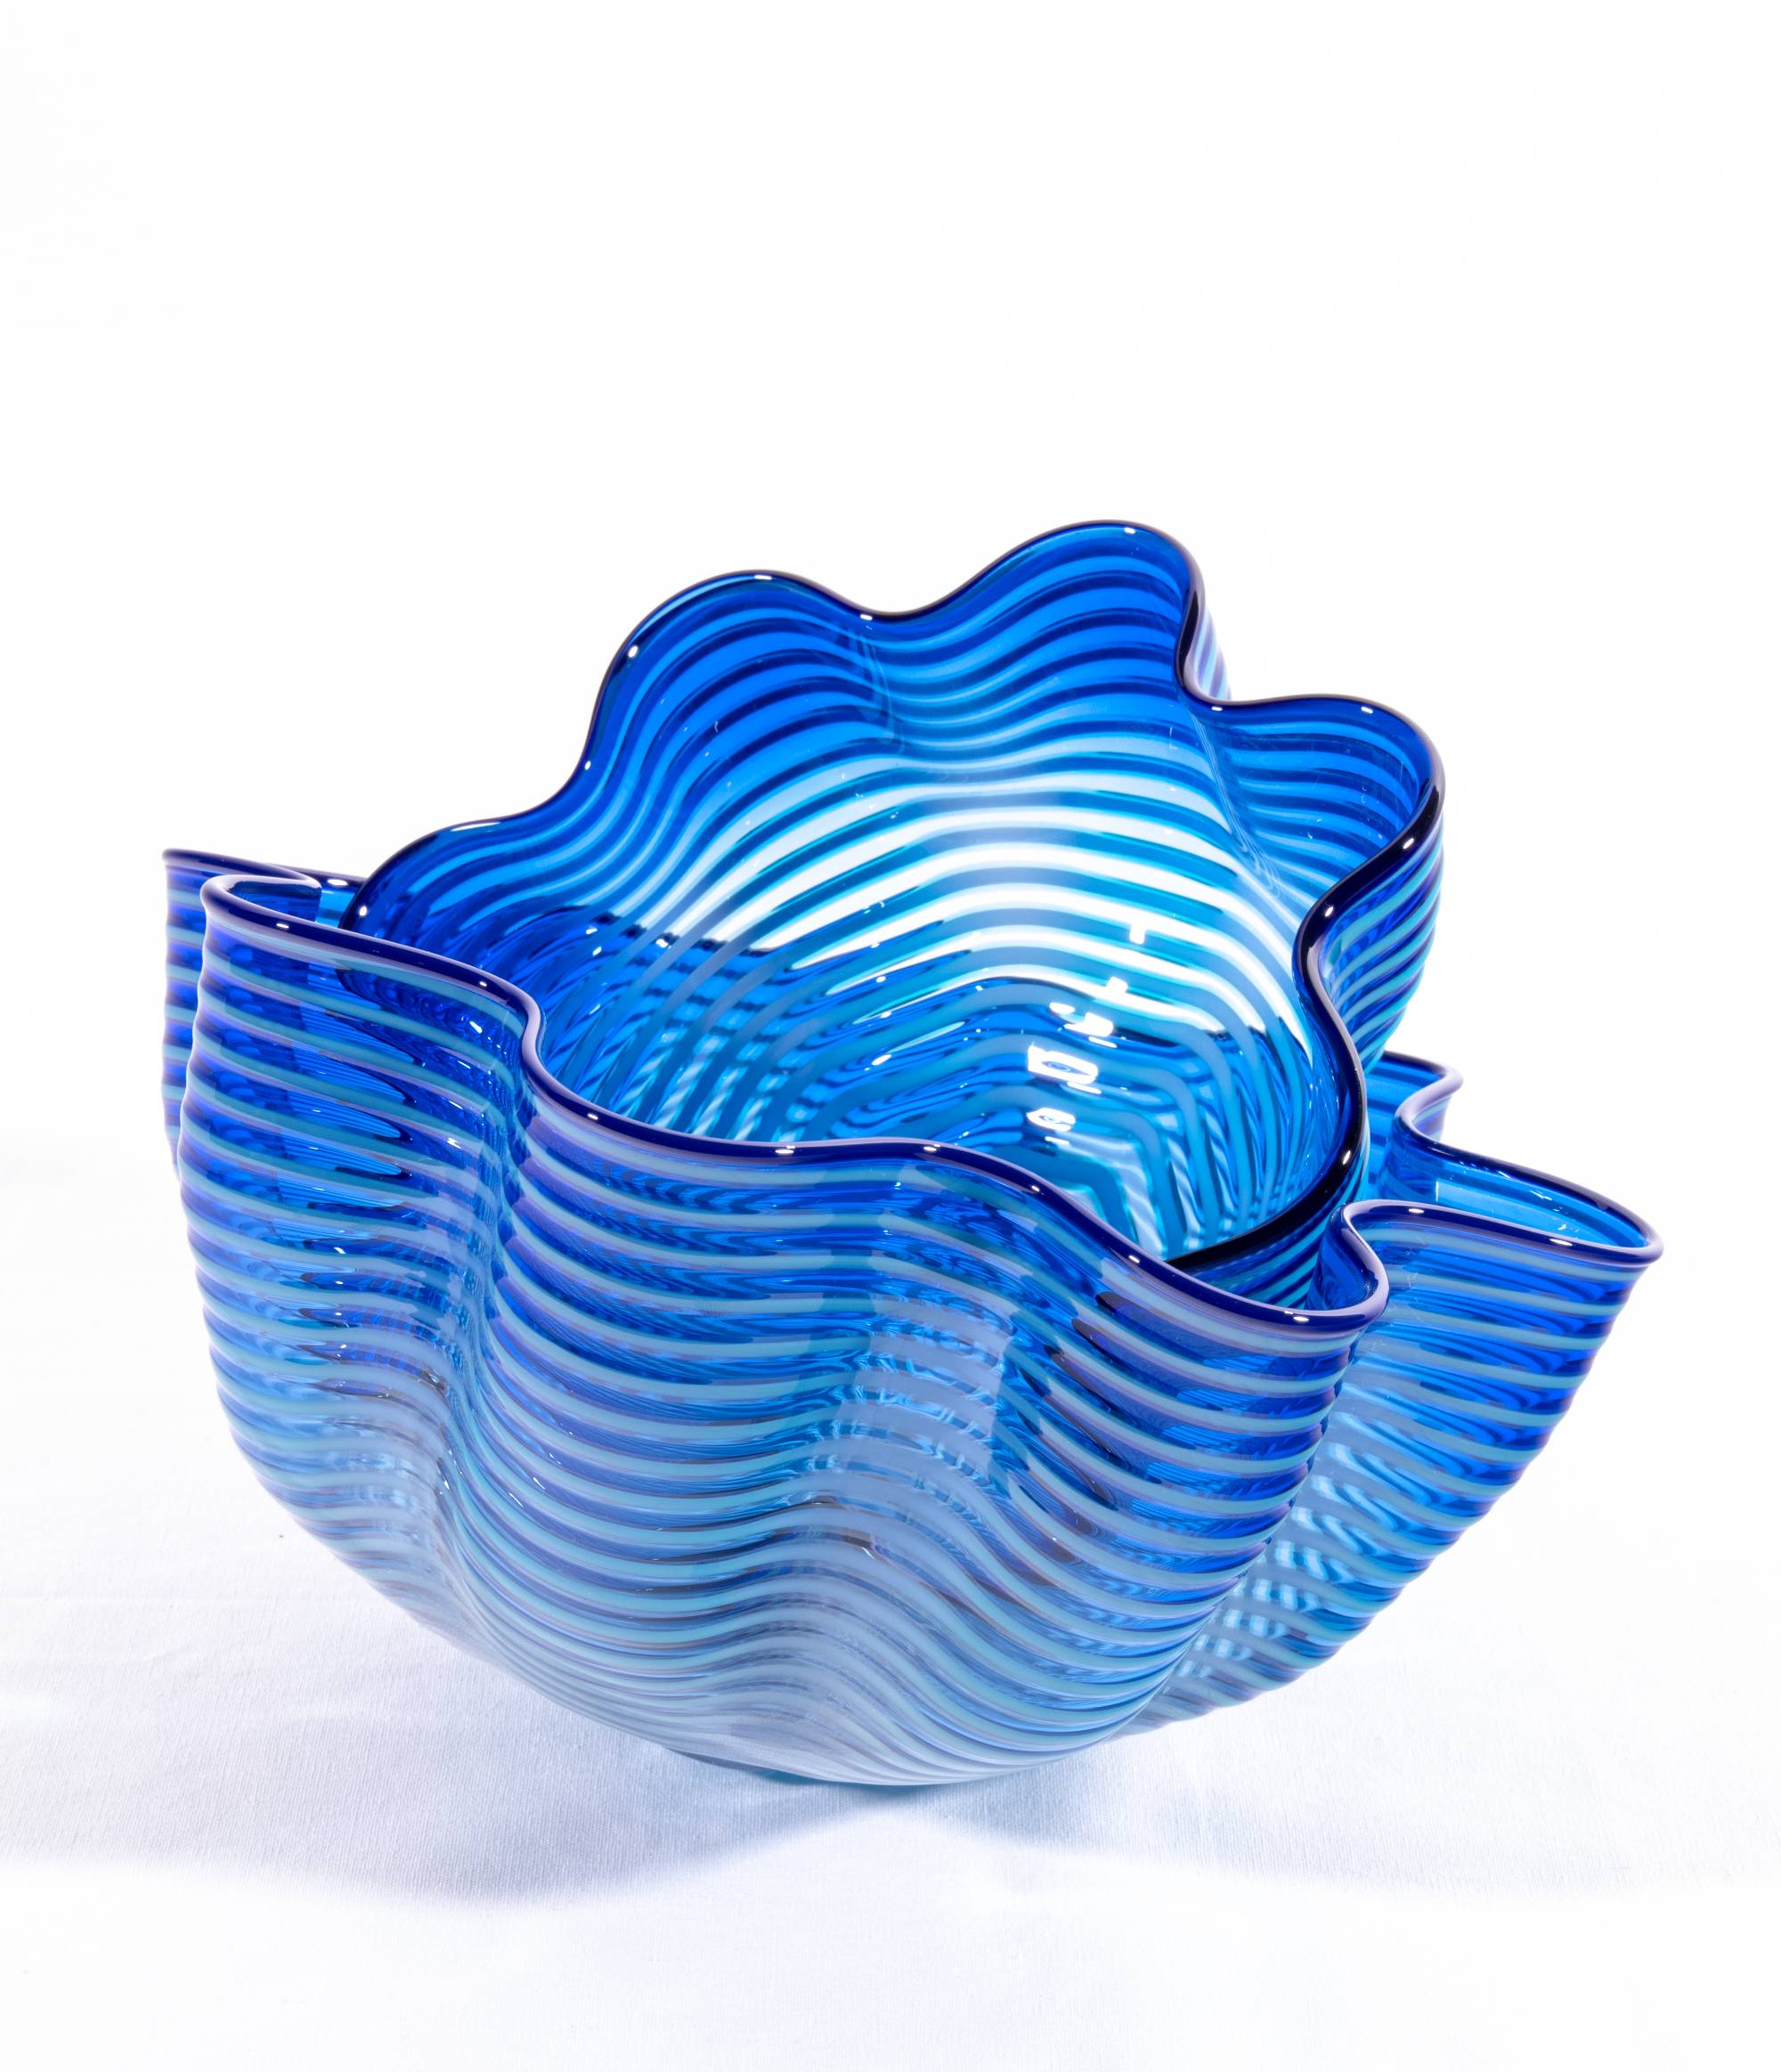 blue ribbed bowls nessled